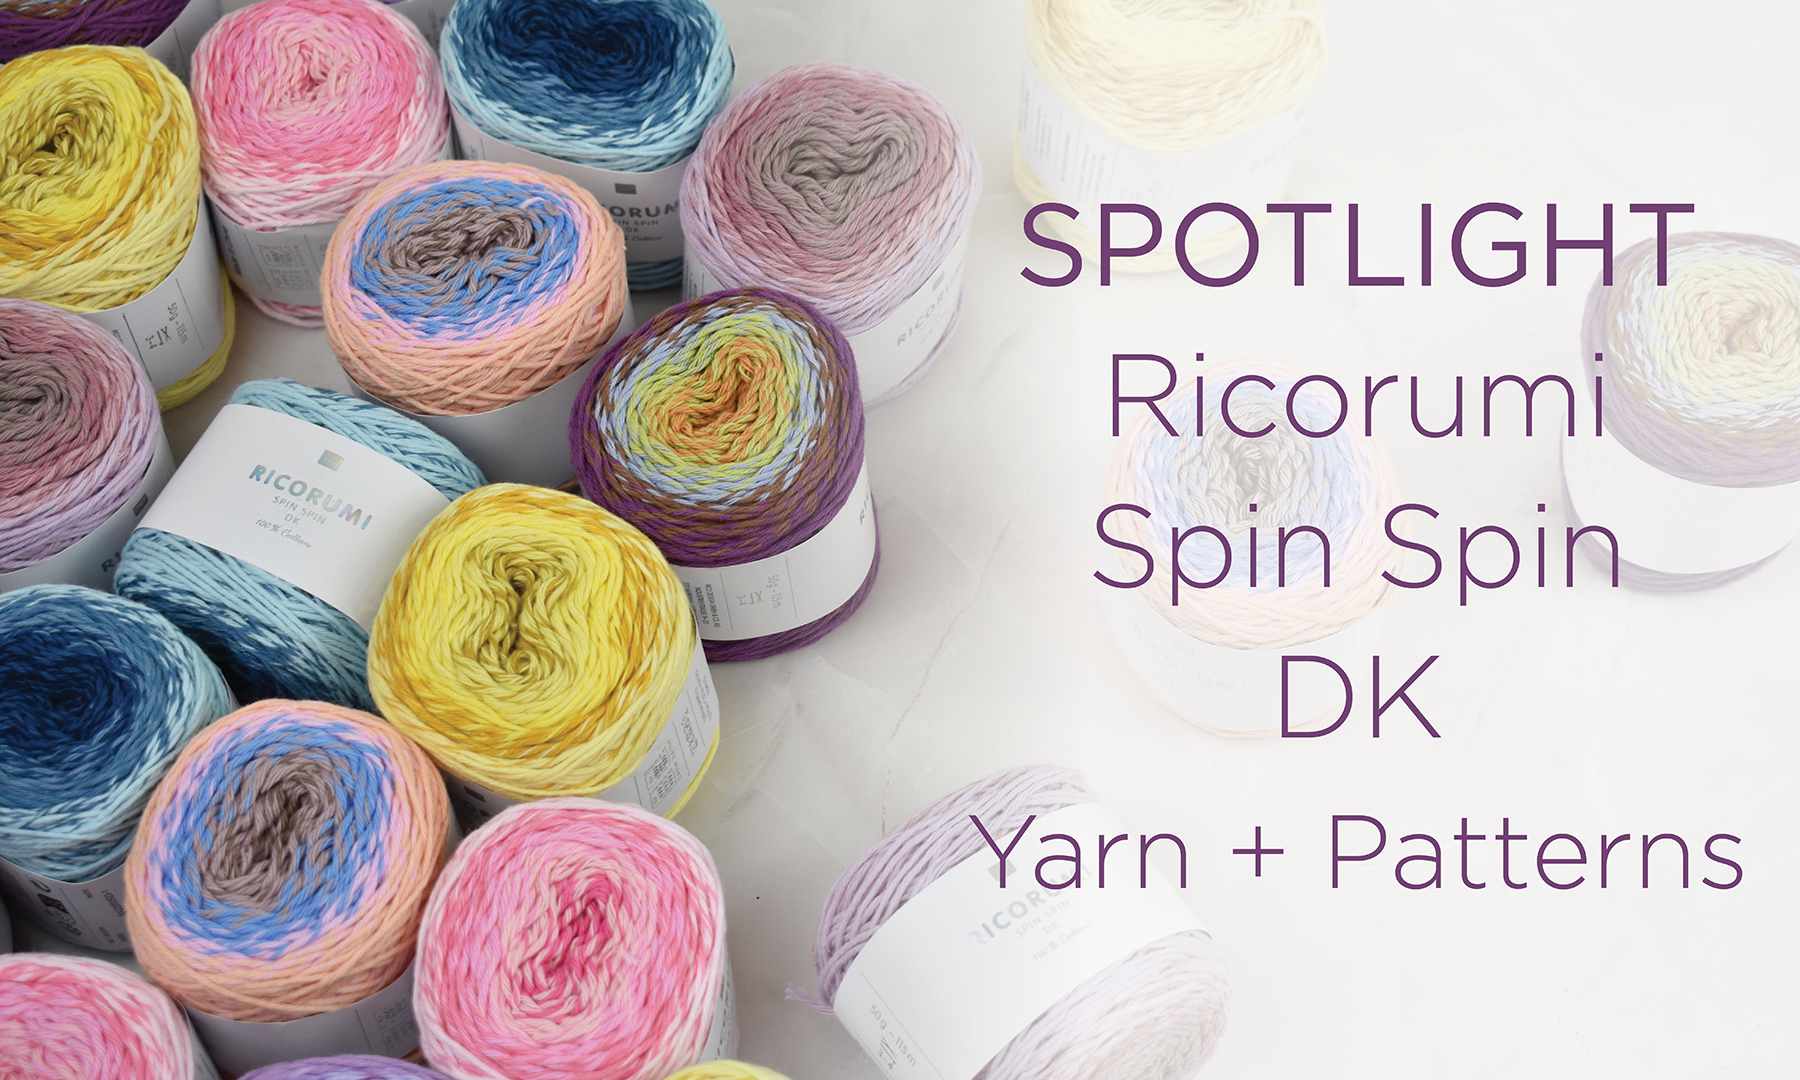 Multiple balls of Ricorumi Spin Spin DK on the right, with text reading: Spotlight: Ricorumi Spin Spin DK Yarn + Patterns.